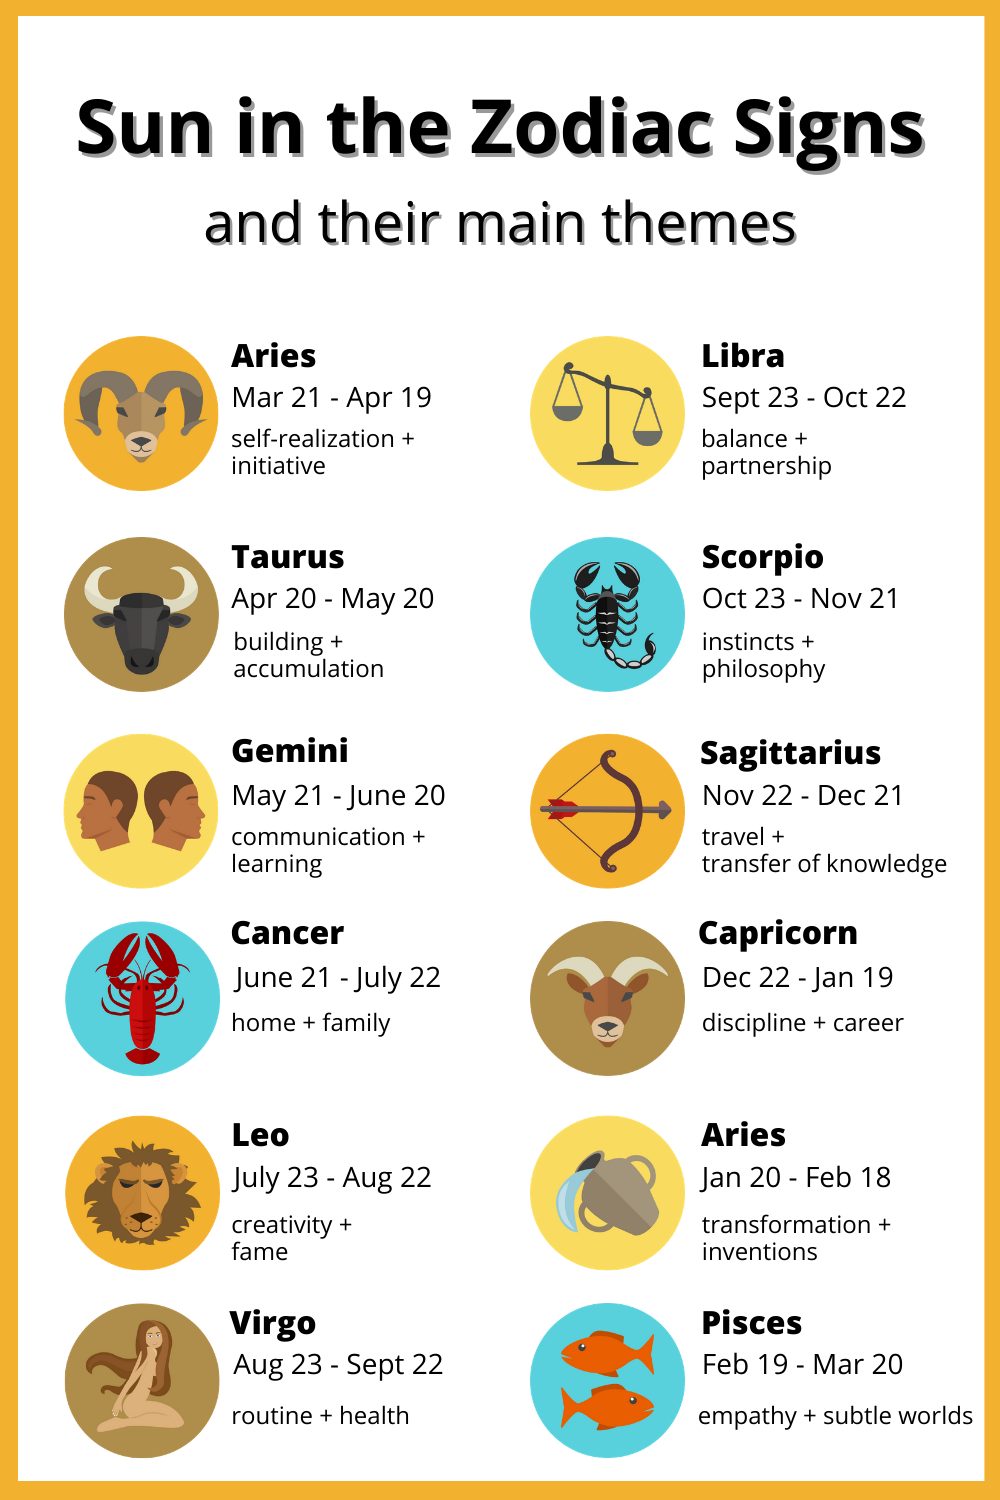 Sun in the Zodiac Signs